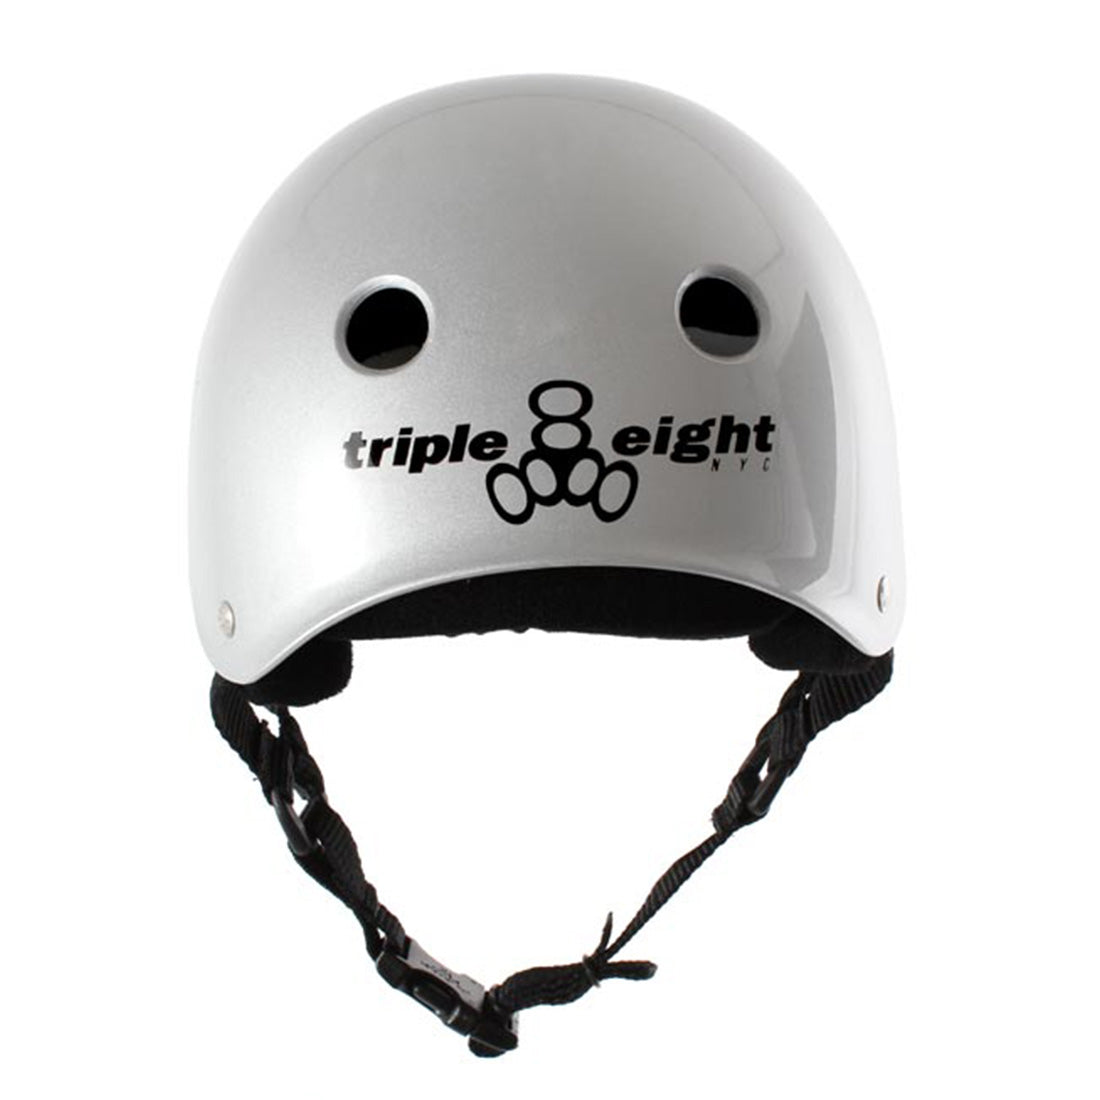 Triple 8 Skate SS Helmet - Silver Metallic Gloss Helmets